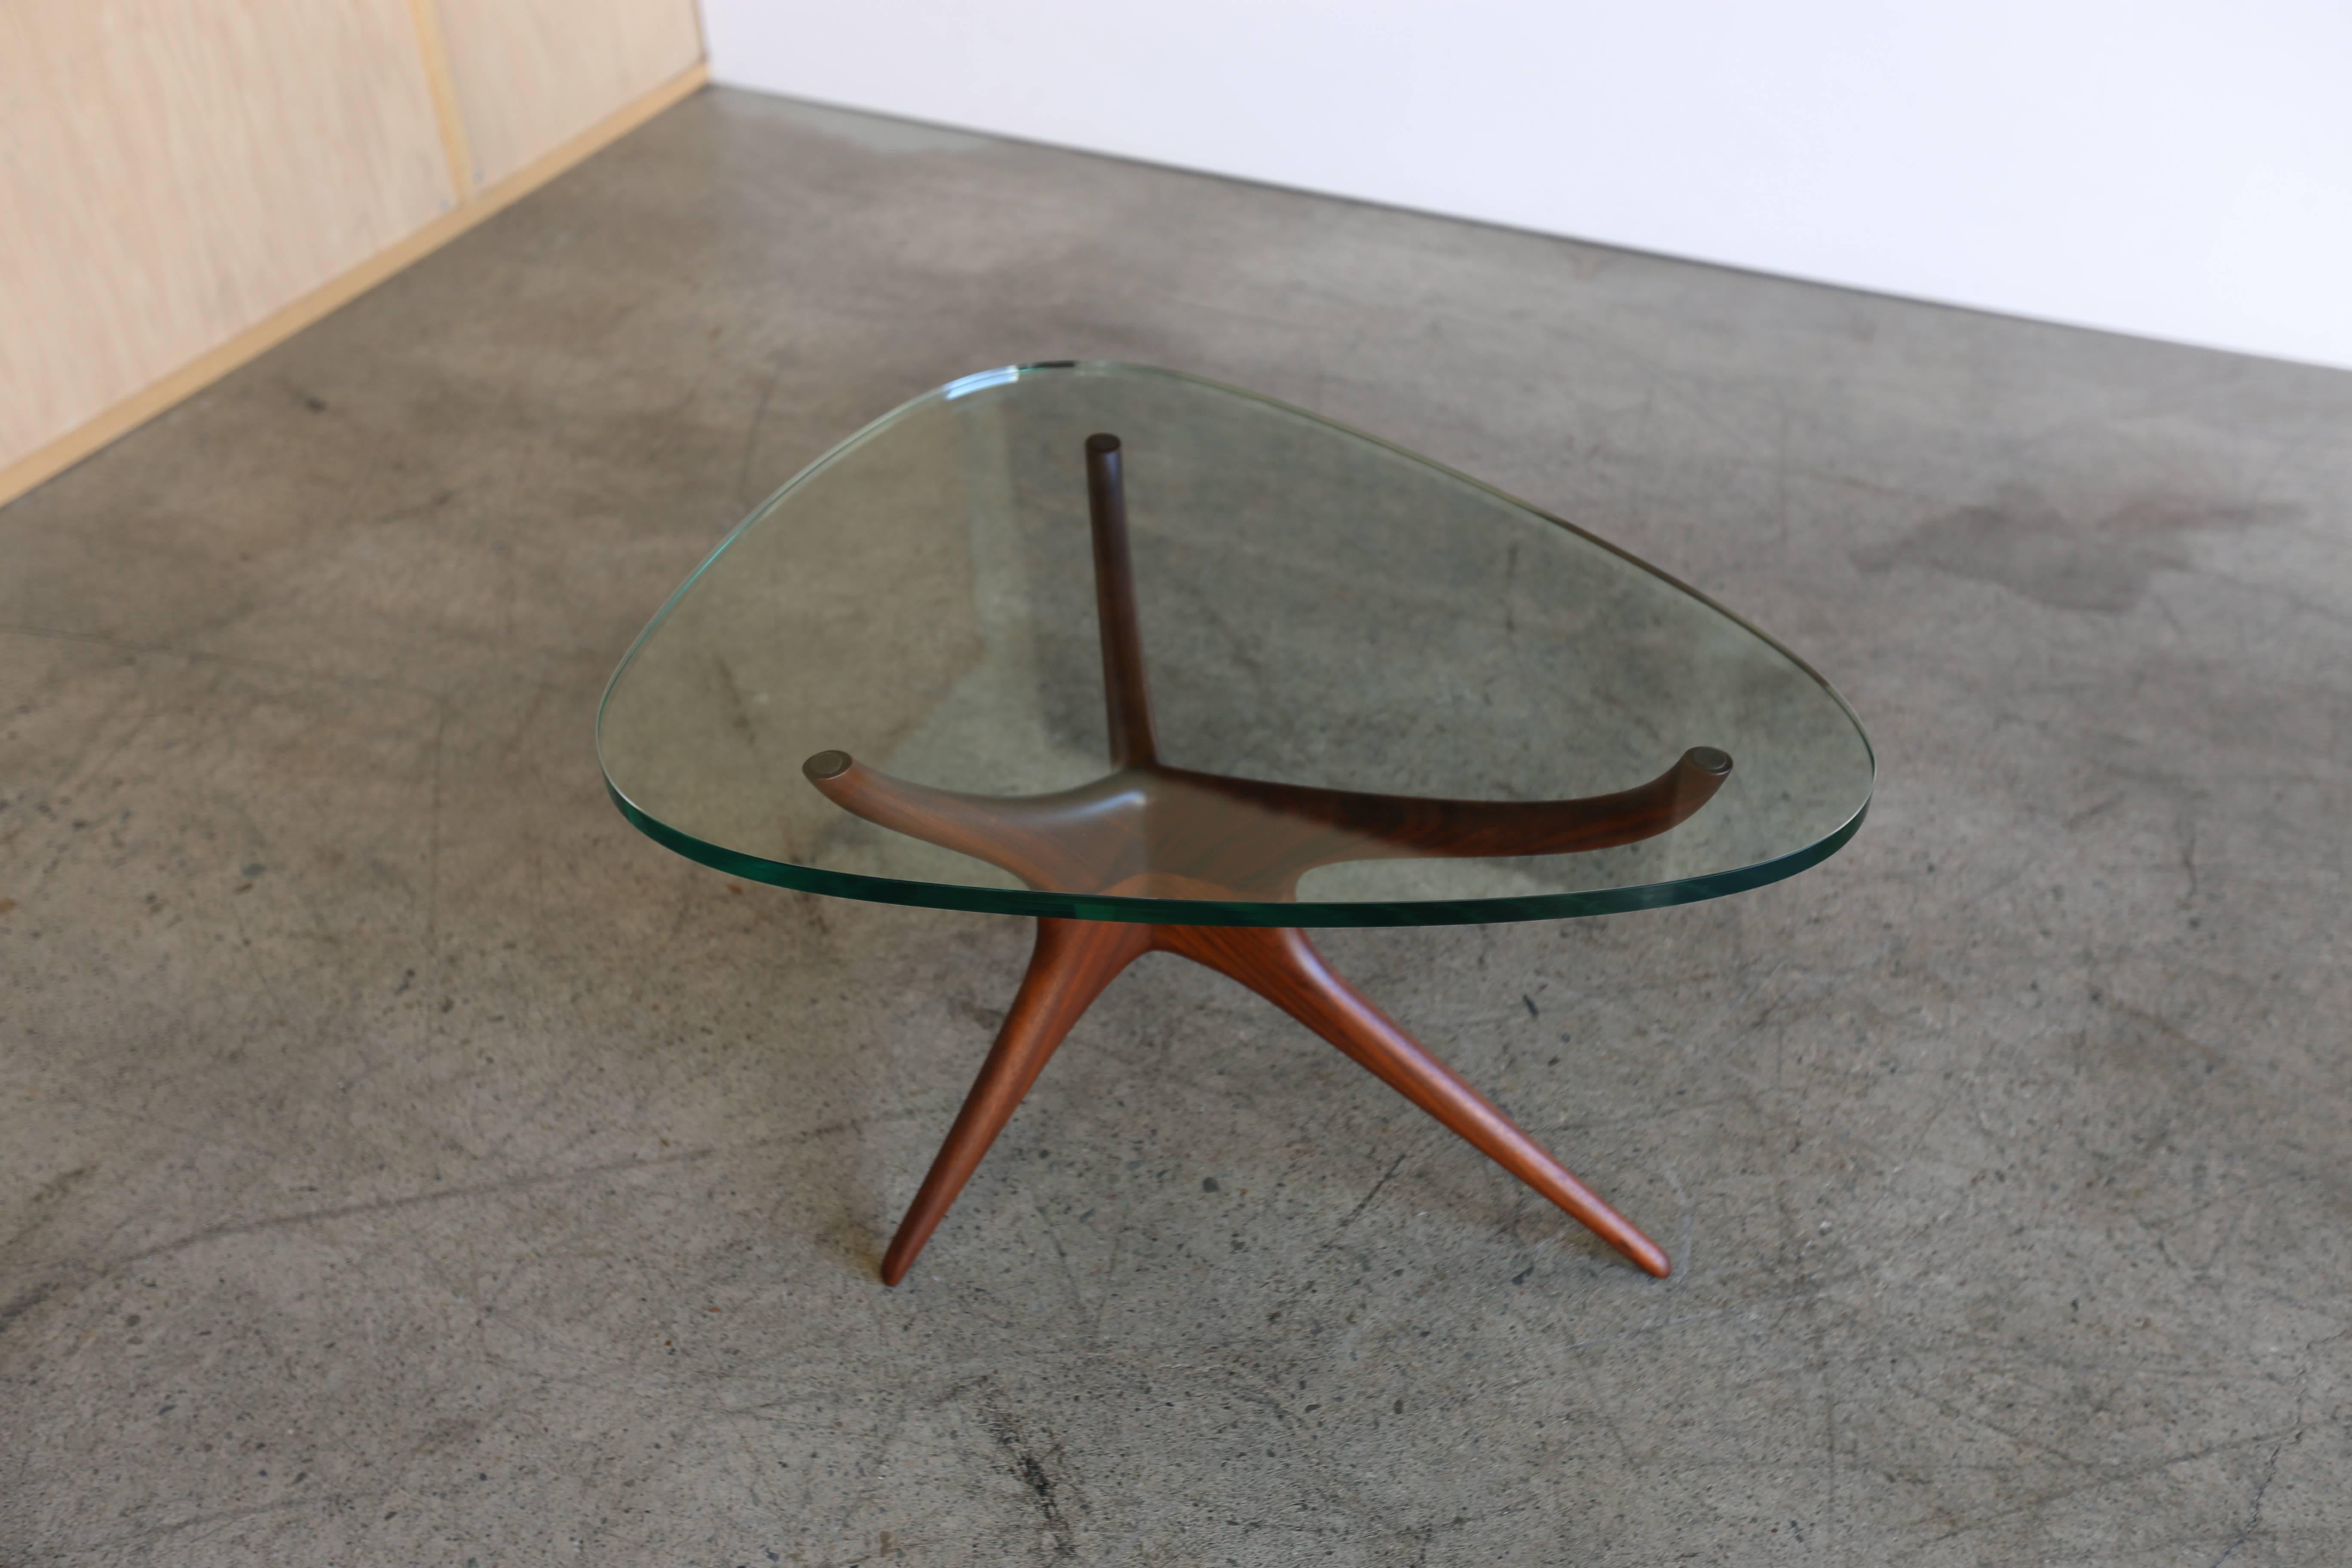 Tri-symmetric glass and walnut occasional table by Vladimir Kagan for Kagan-Dreyfuss, Inc.